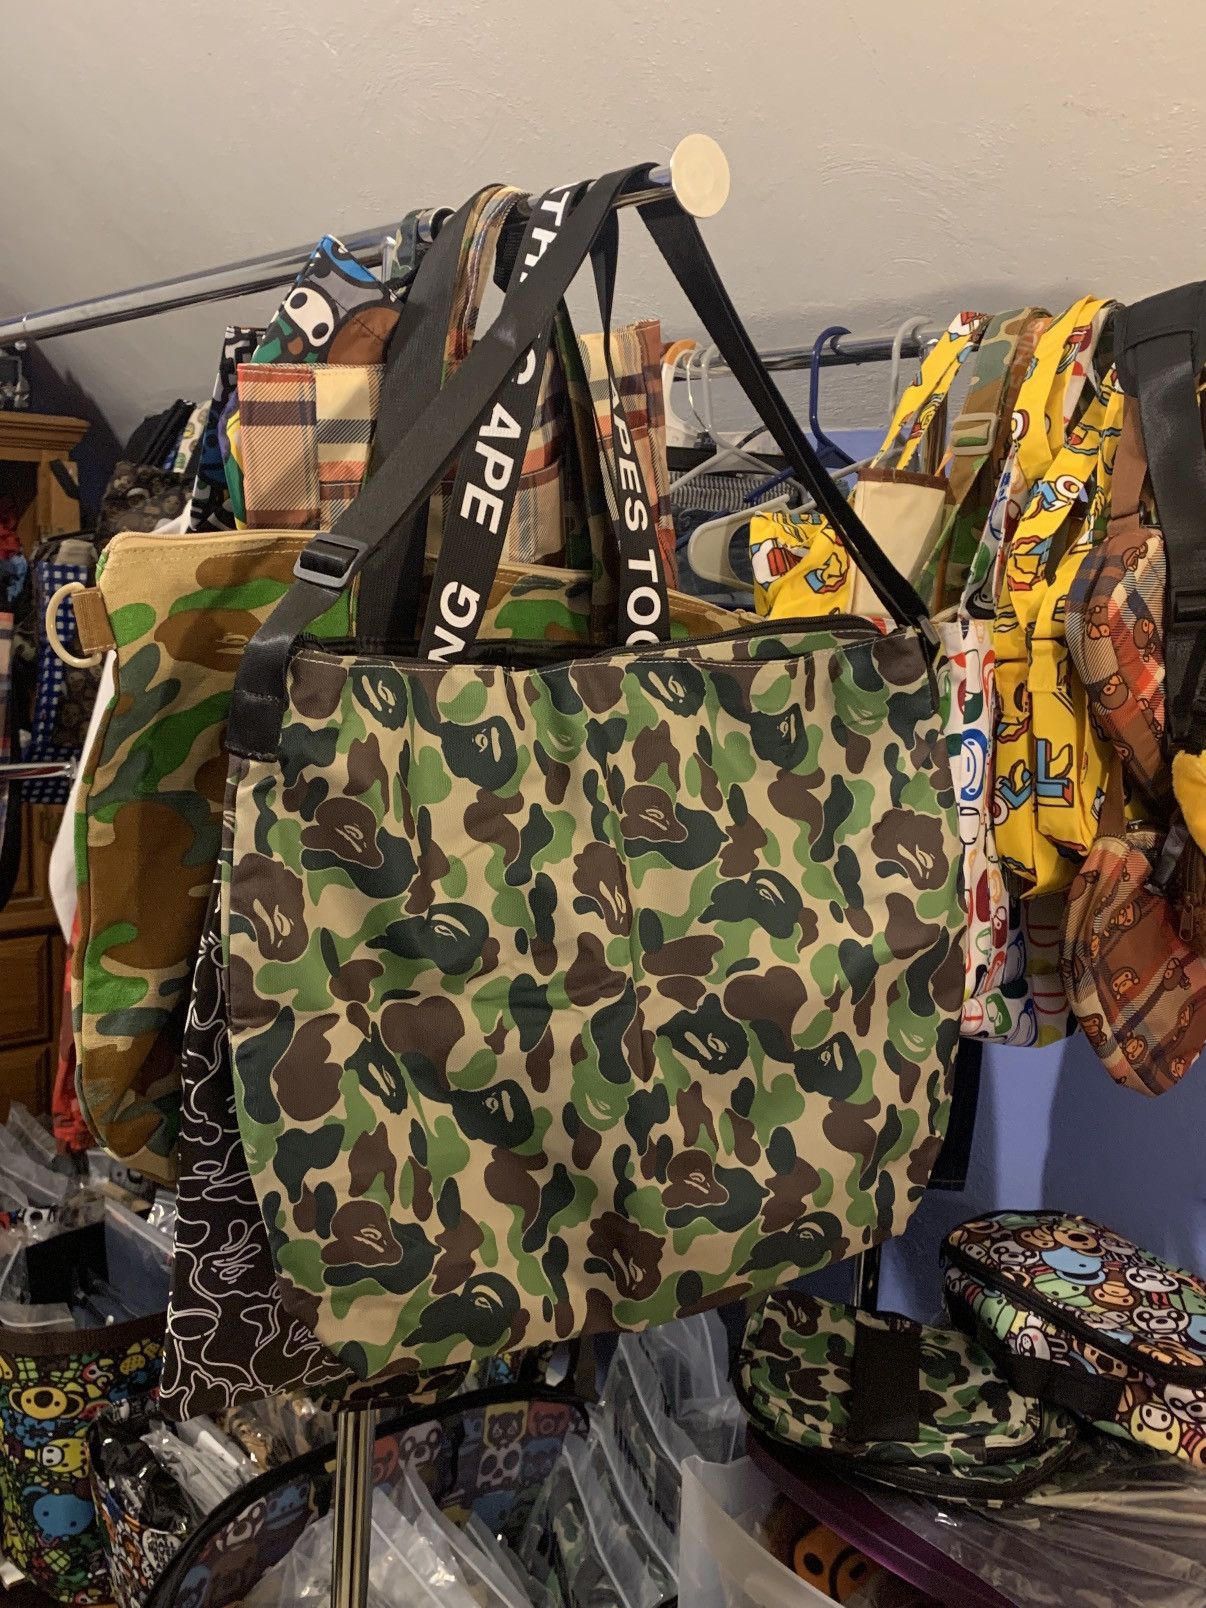 Bape x Porter Side Bag For $200 In Store Now!